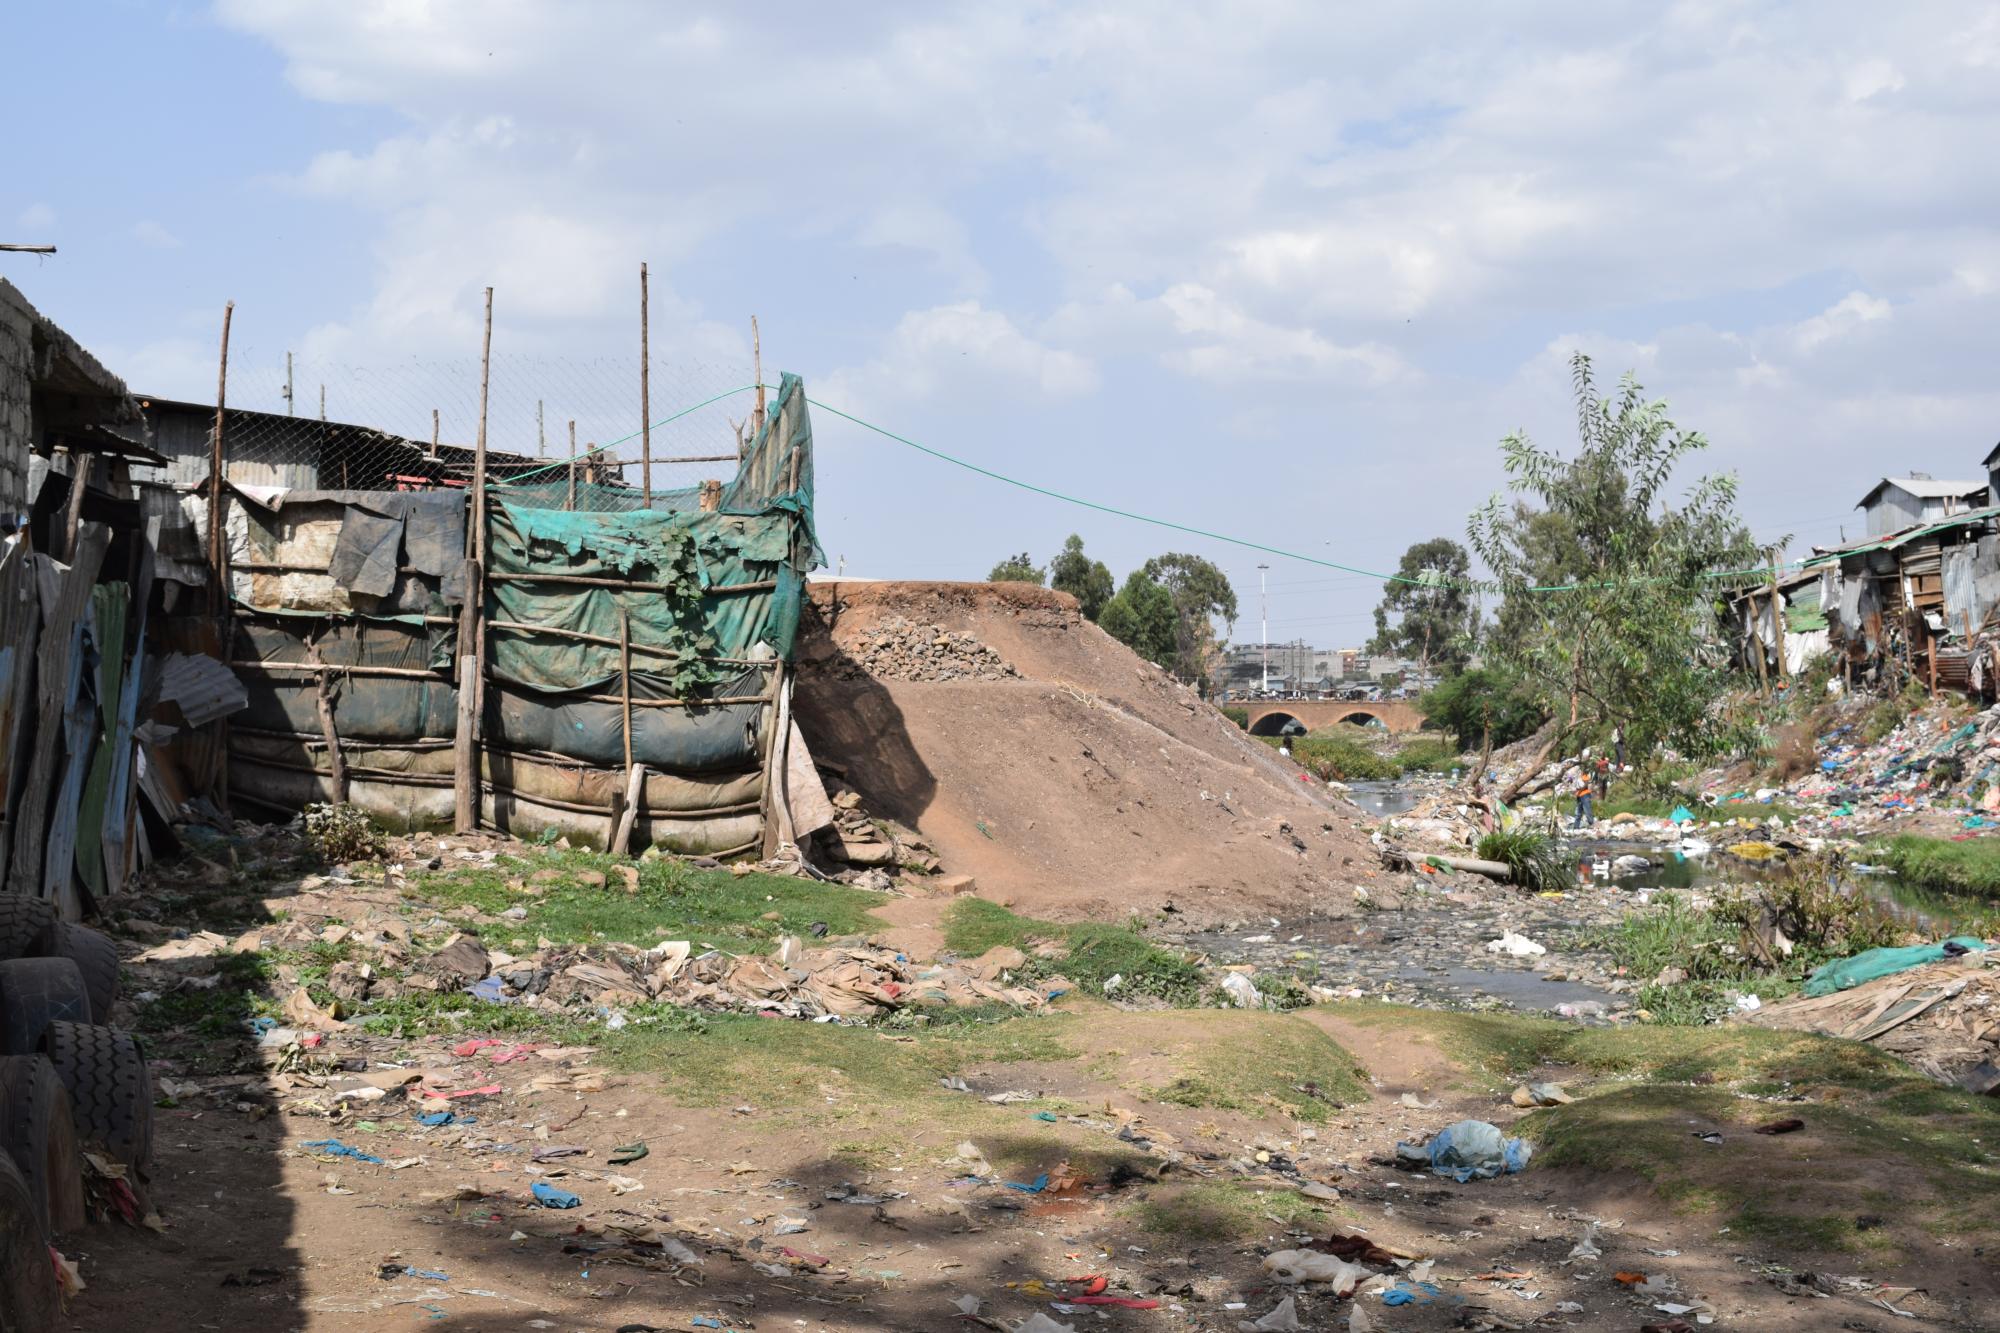 Slum region in Nairobi.